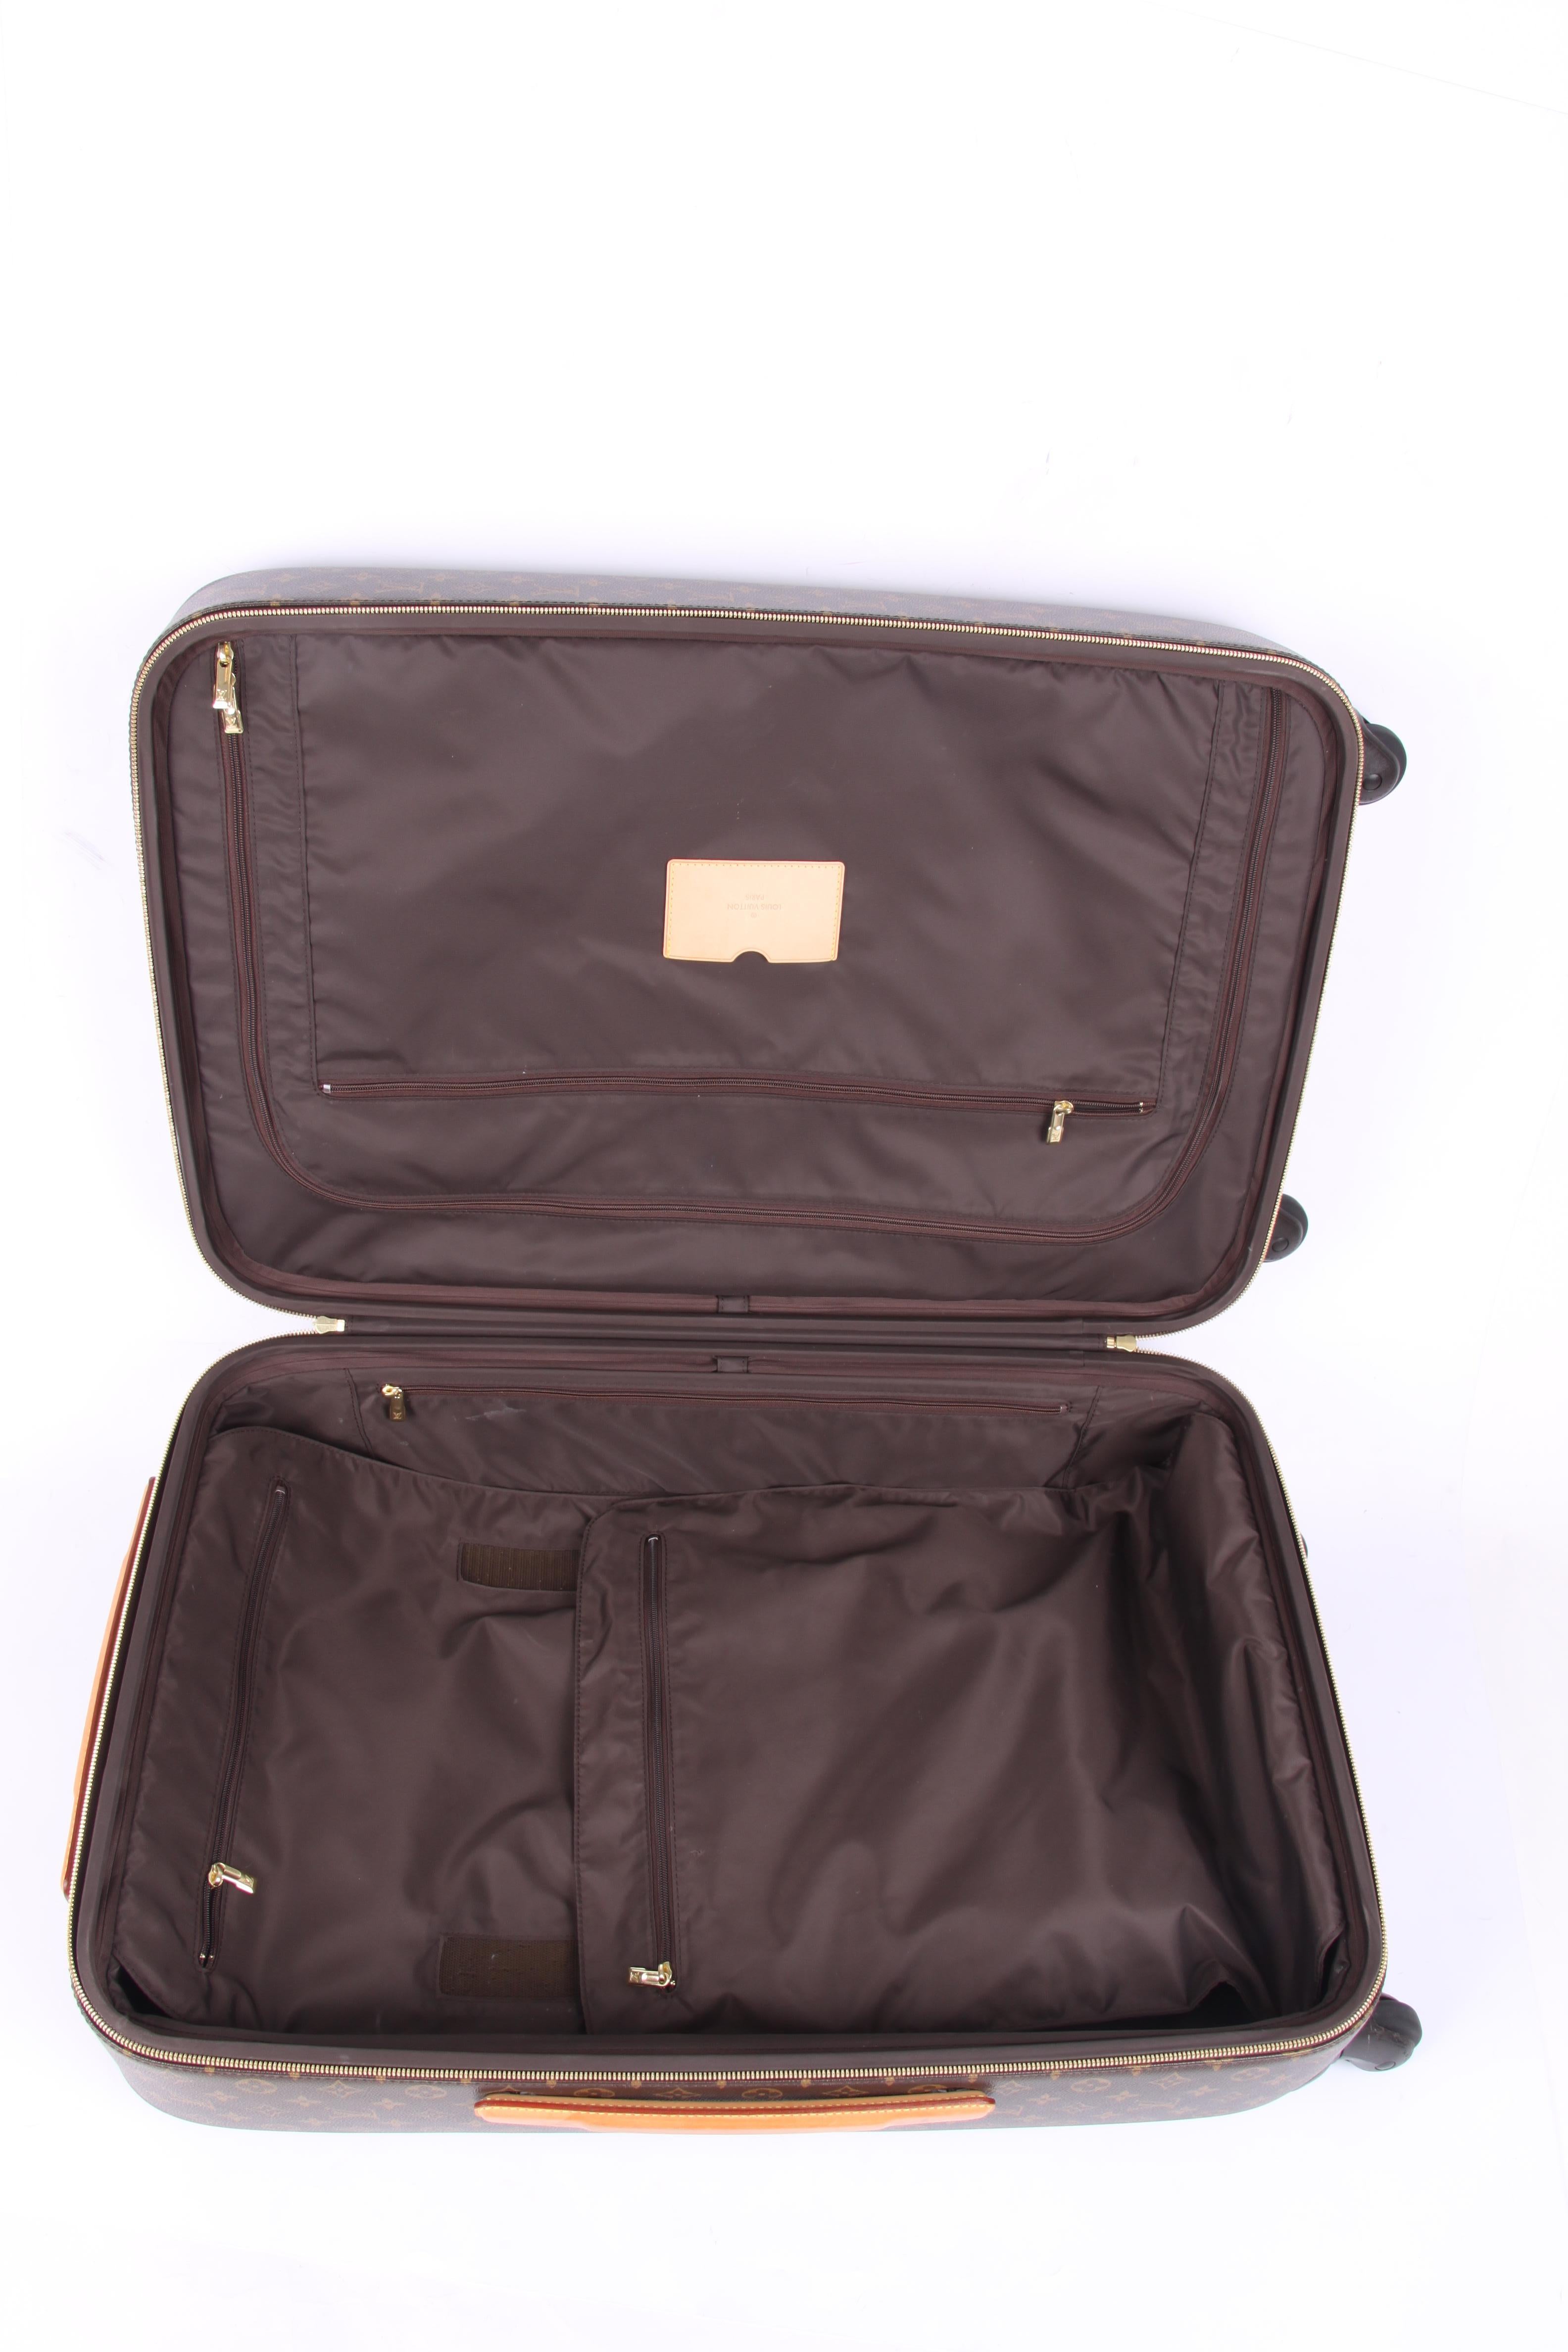   Louis Vuitton Monogram Zephyr 70 Rolling Luggage Bag Suitcase - brown   For Sale 1